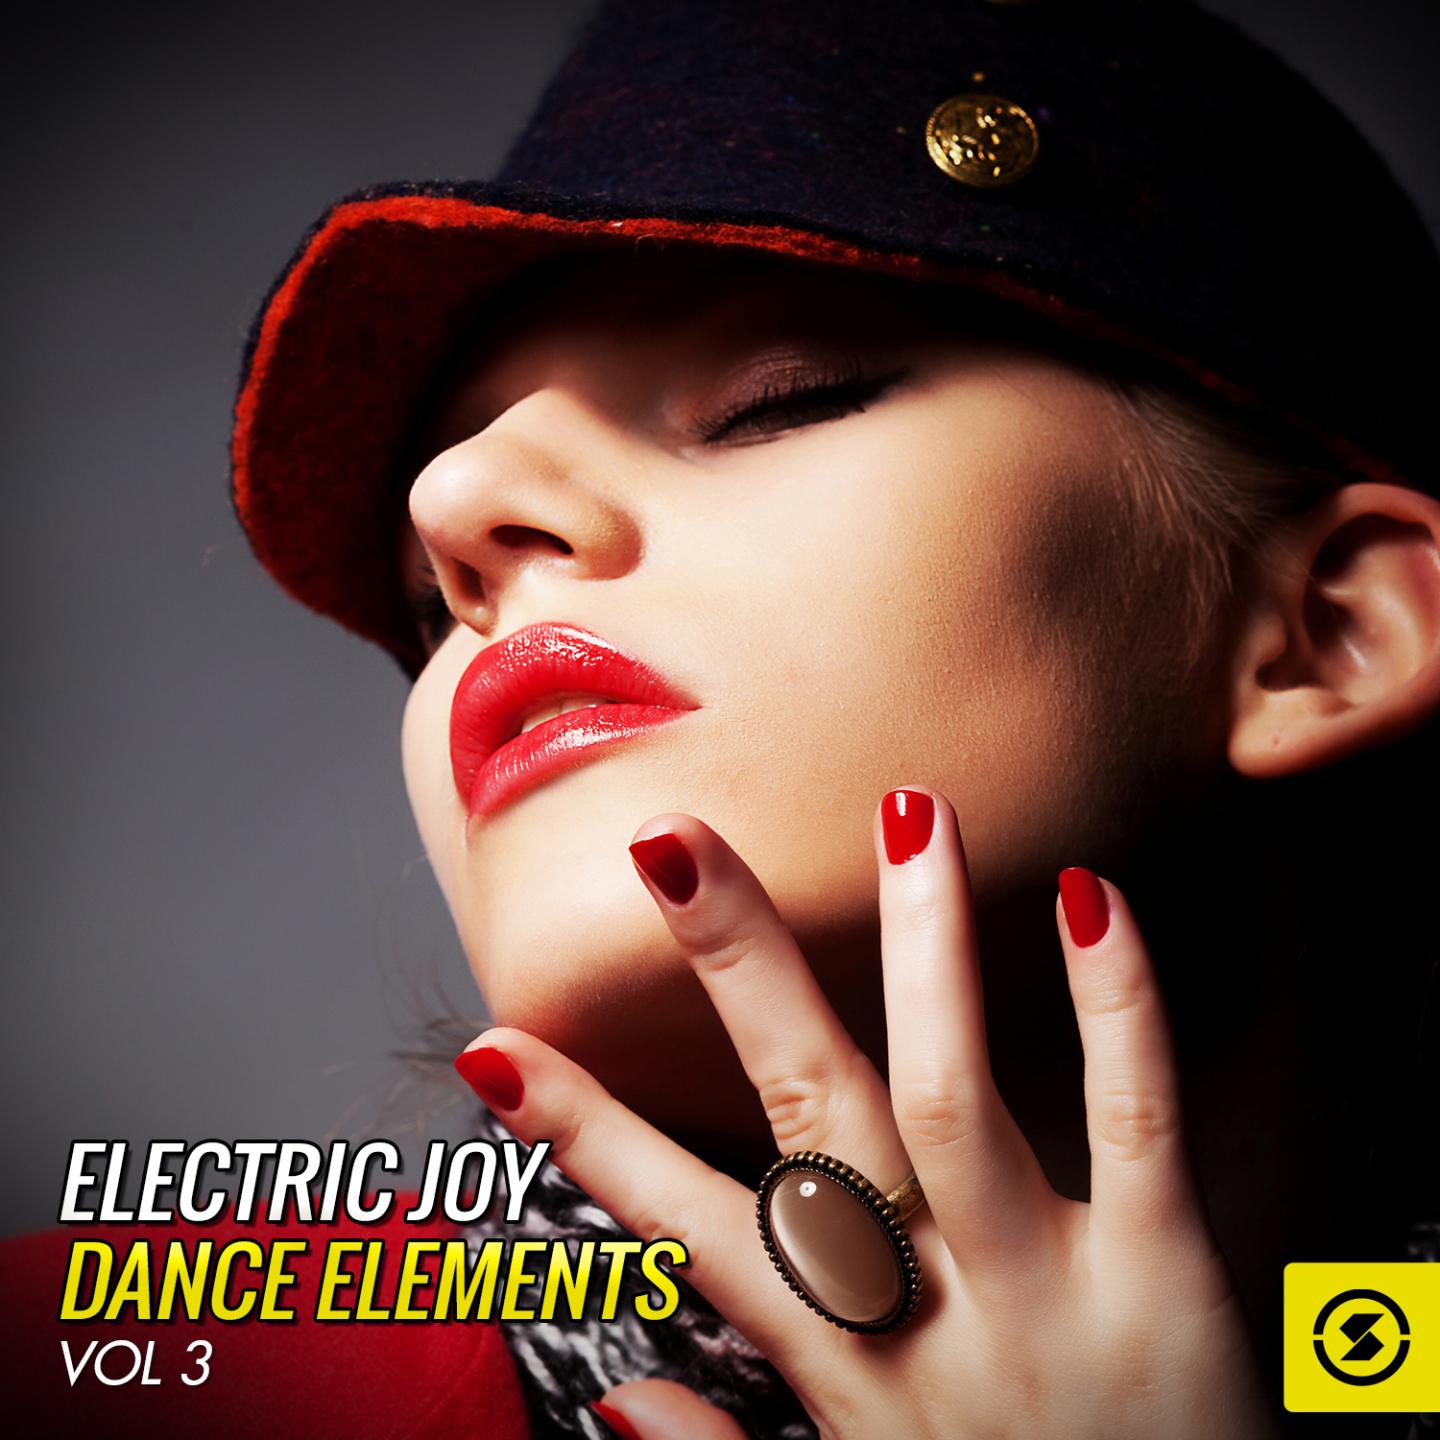 Electric Joy Dance Elements, Vol. 3